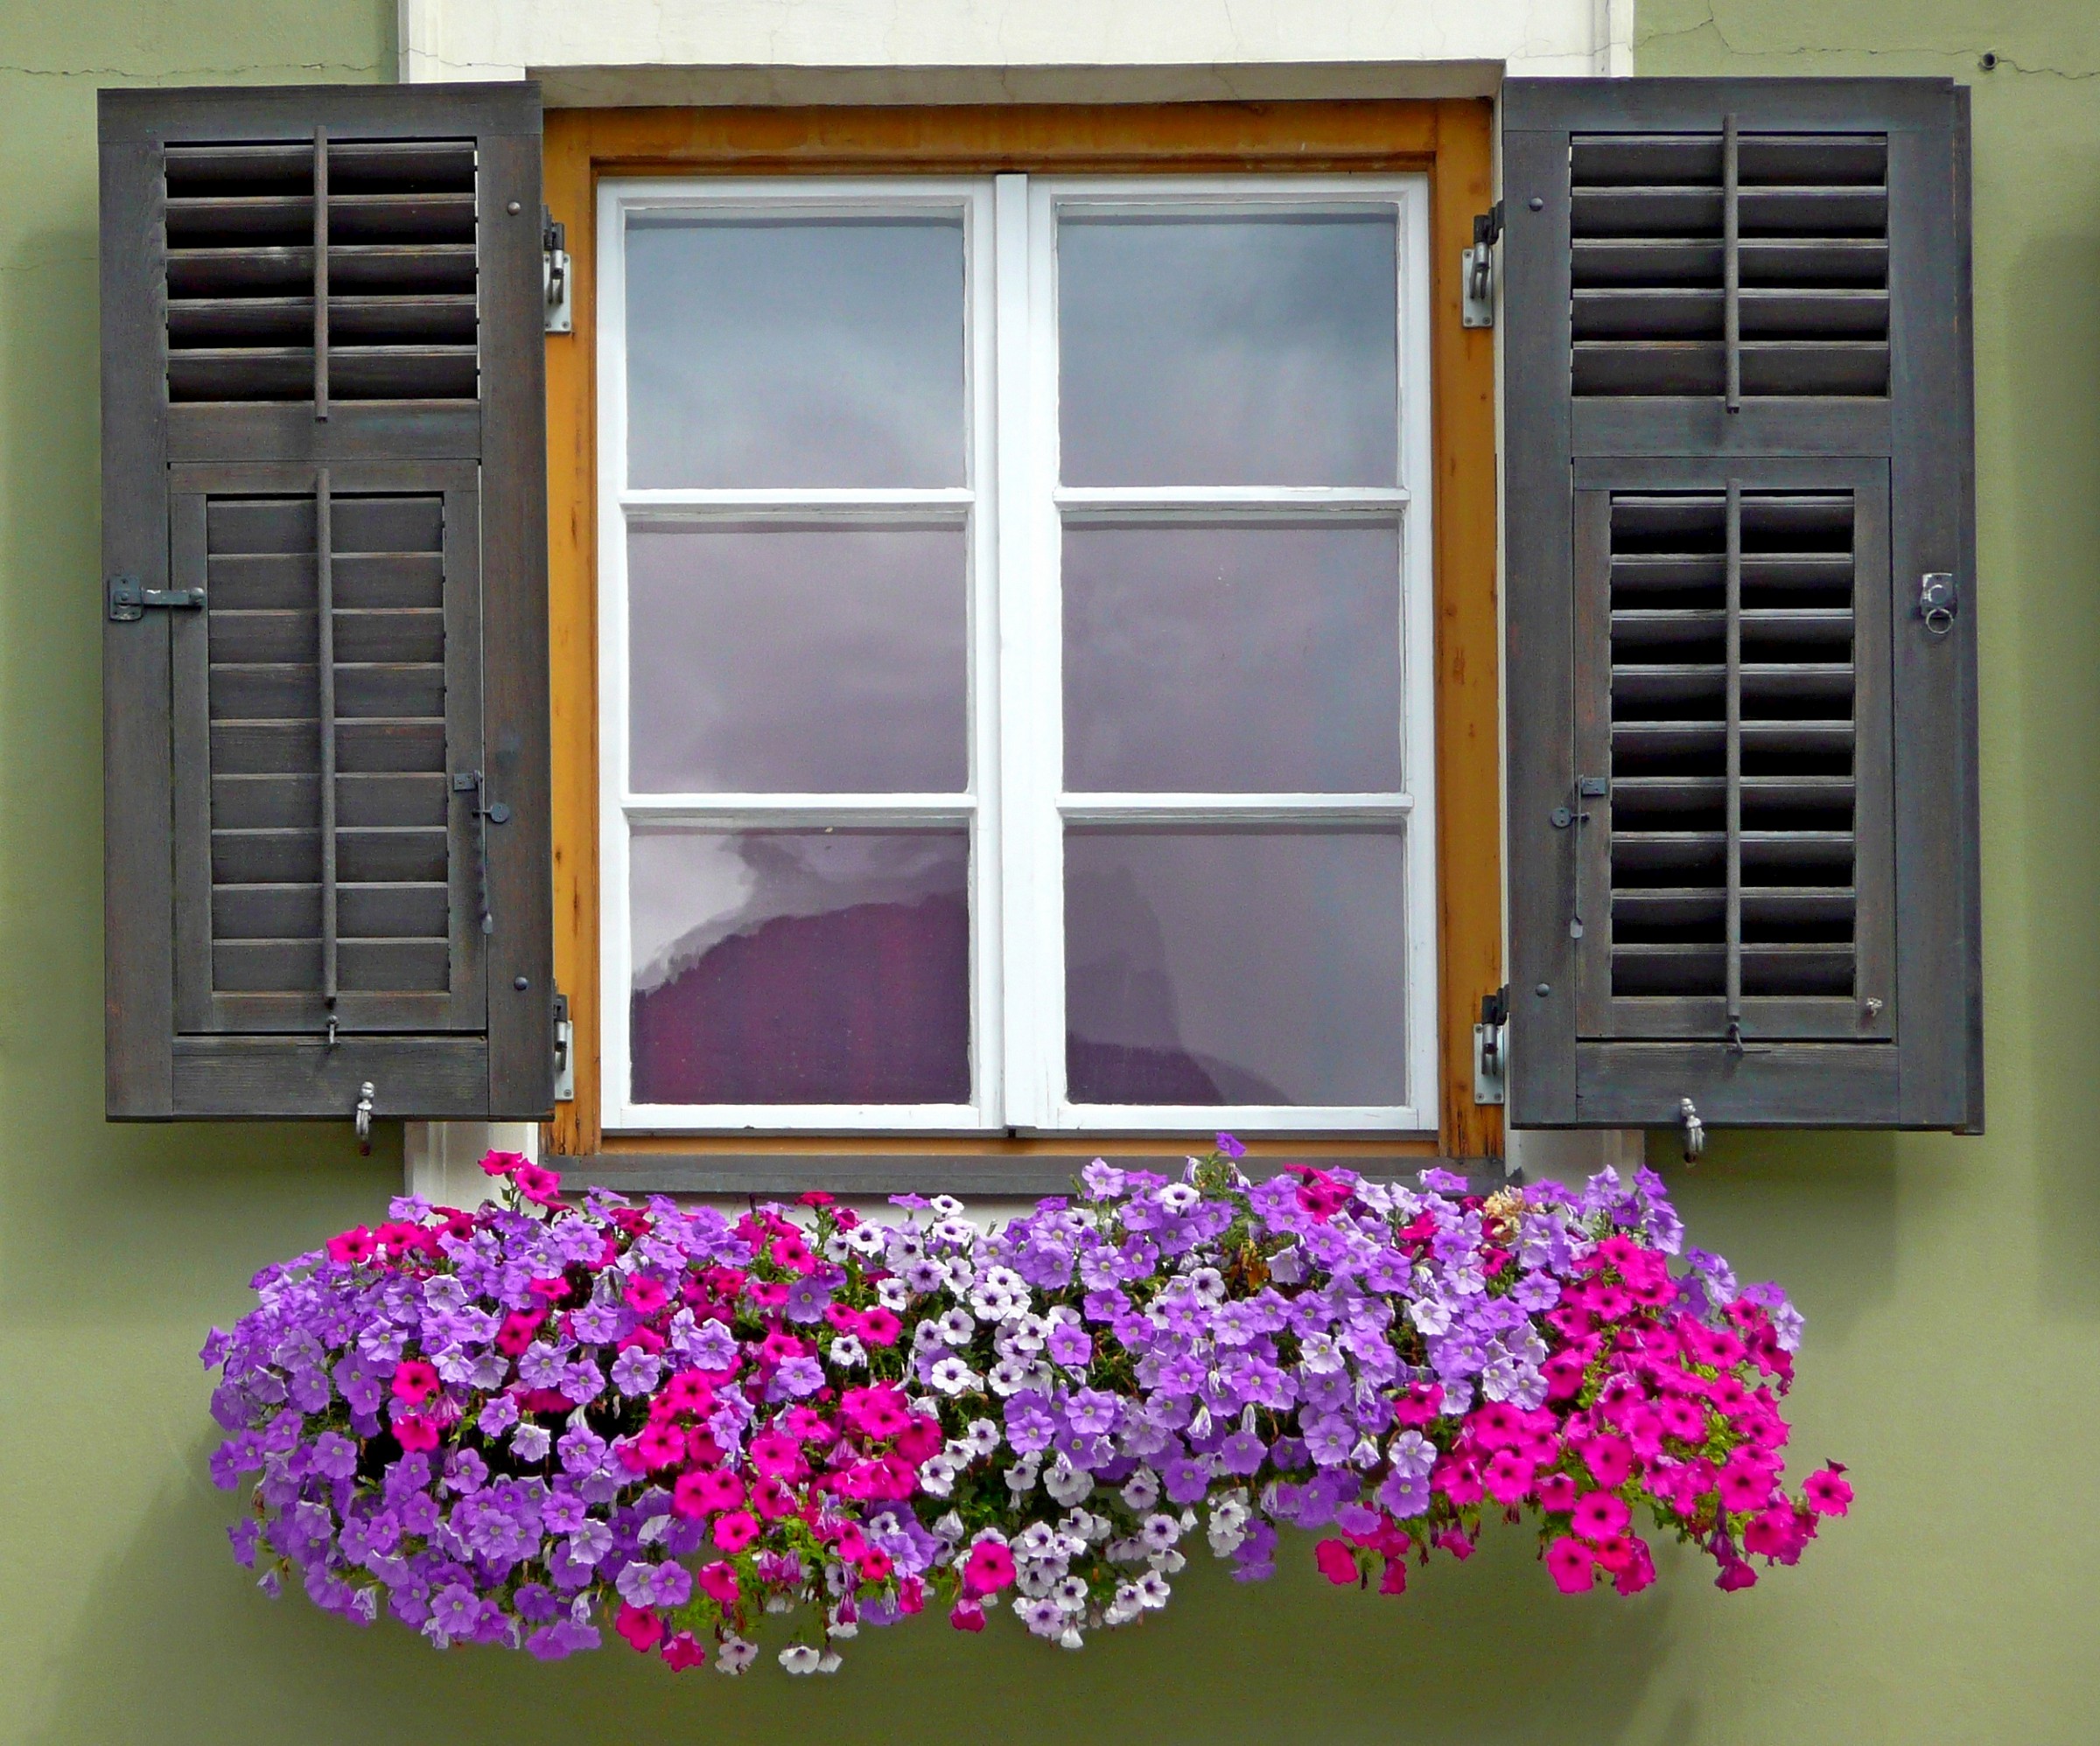 flowered window...